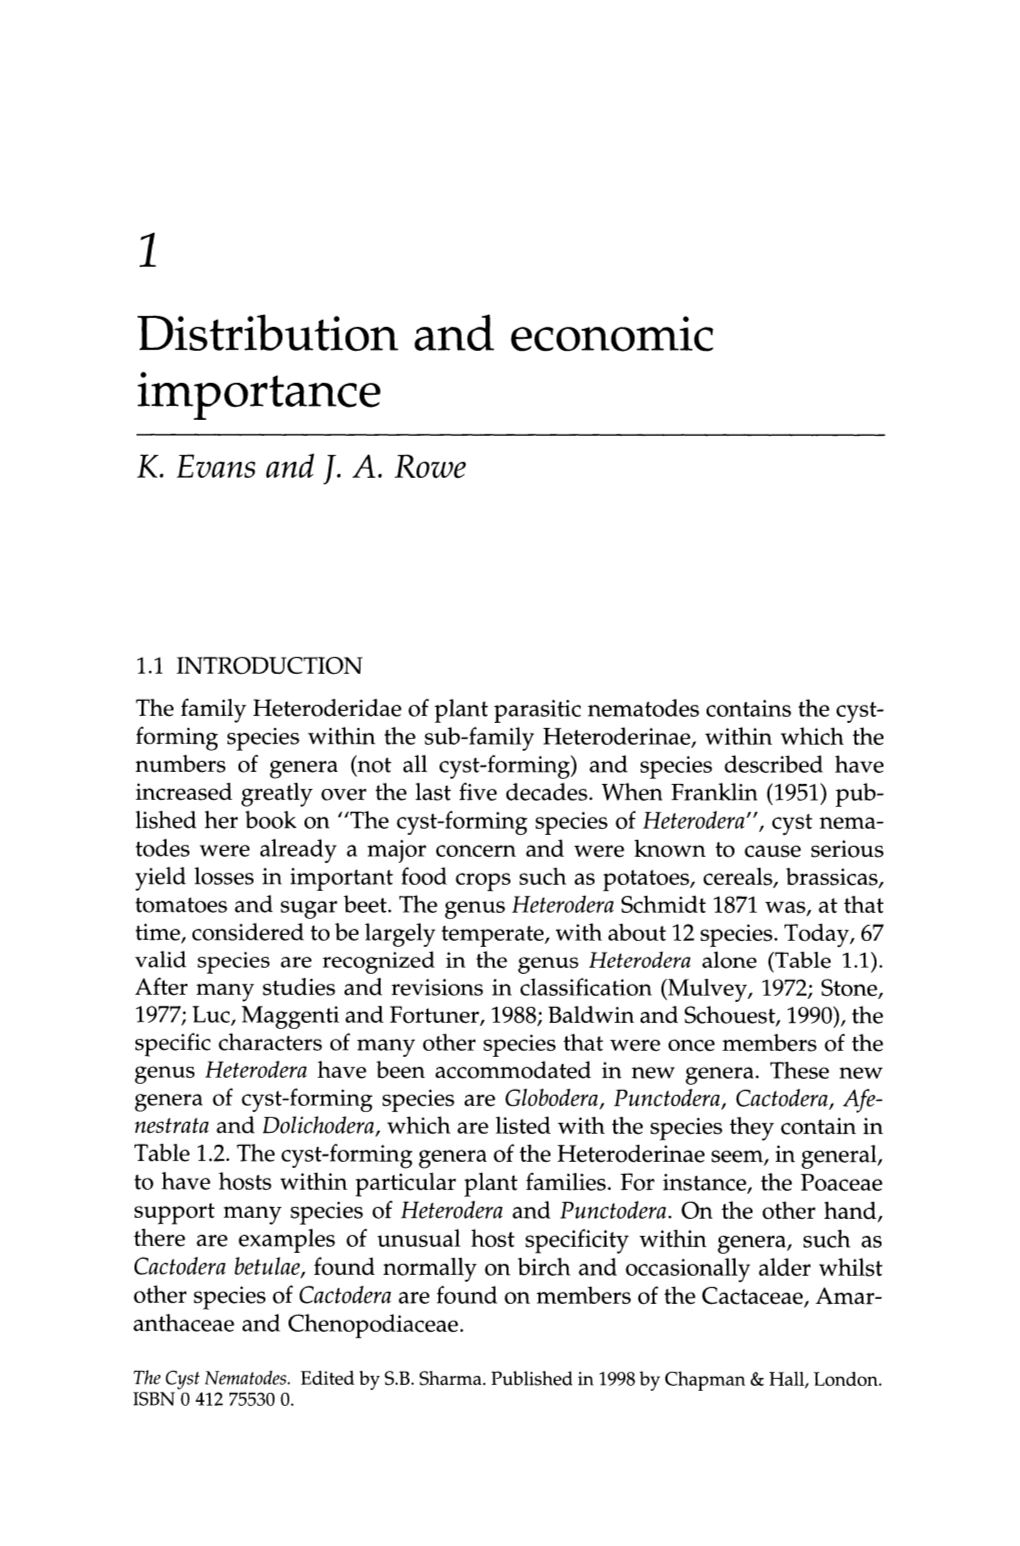 Distribution and Economic Importance K.Evansandf.A.Rowe